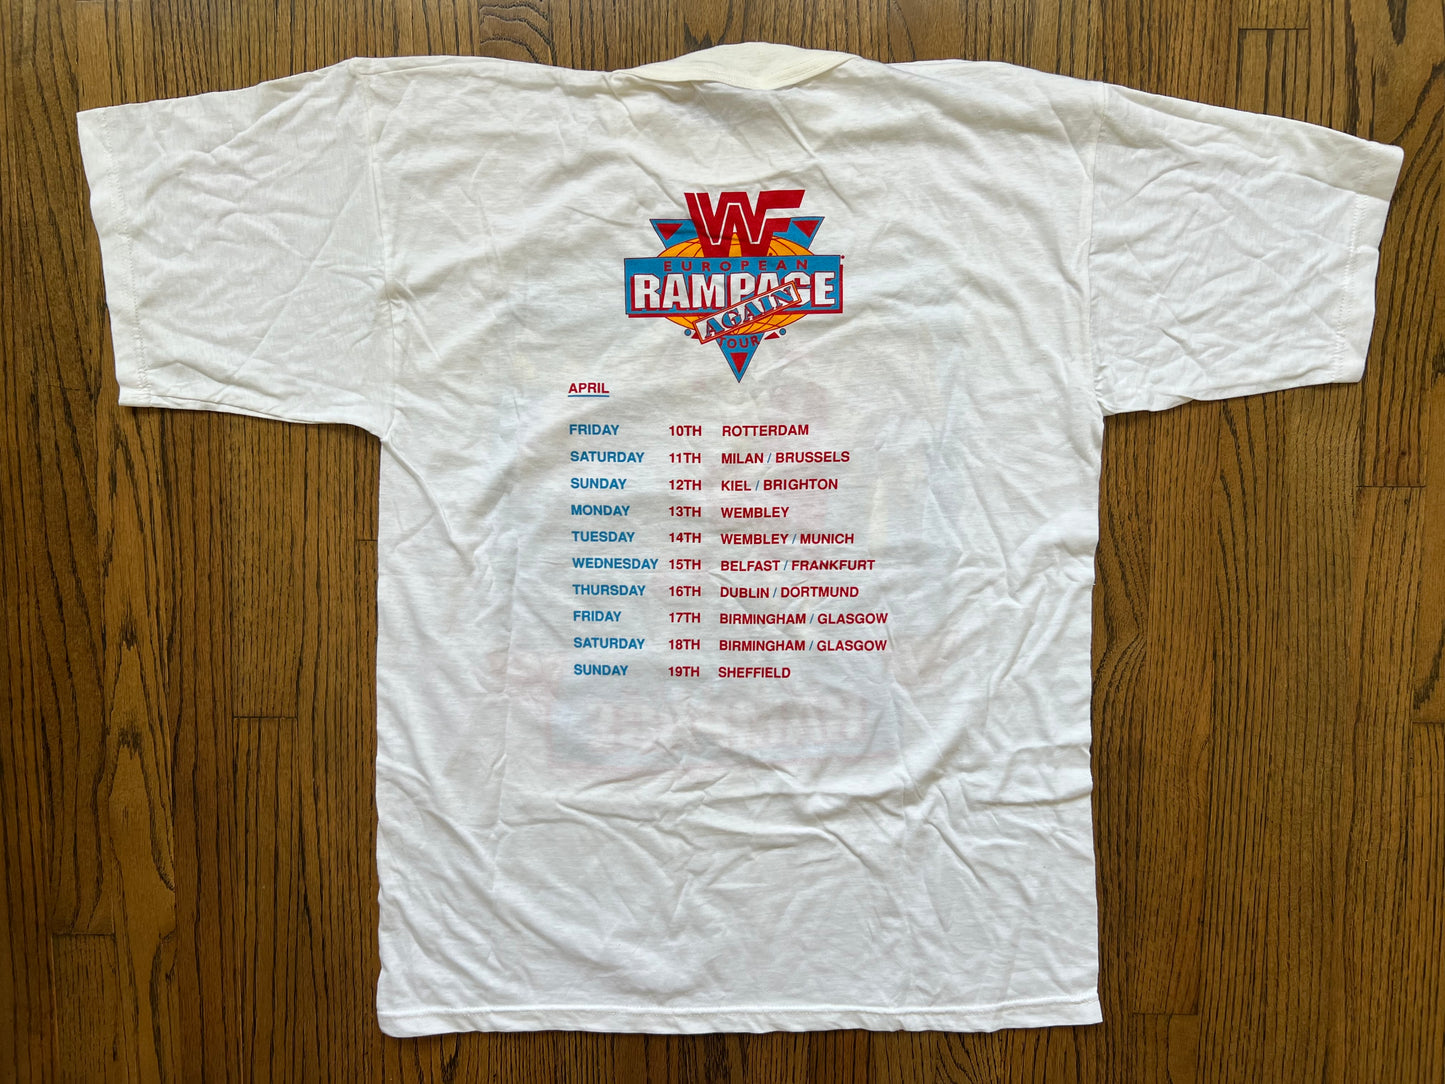 1992 WWF Rampage tour two sided shirt